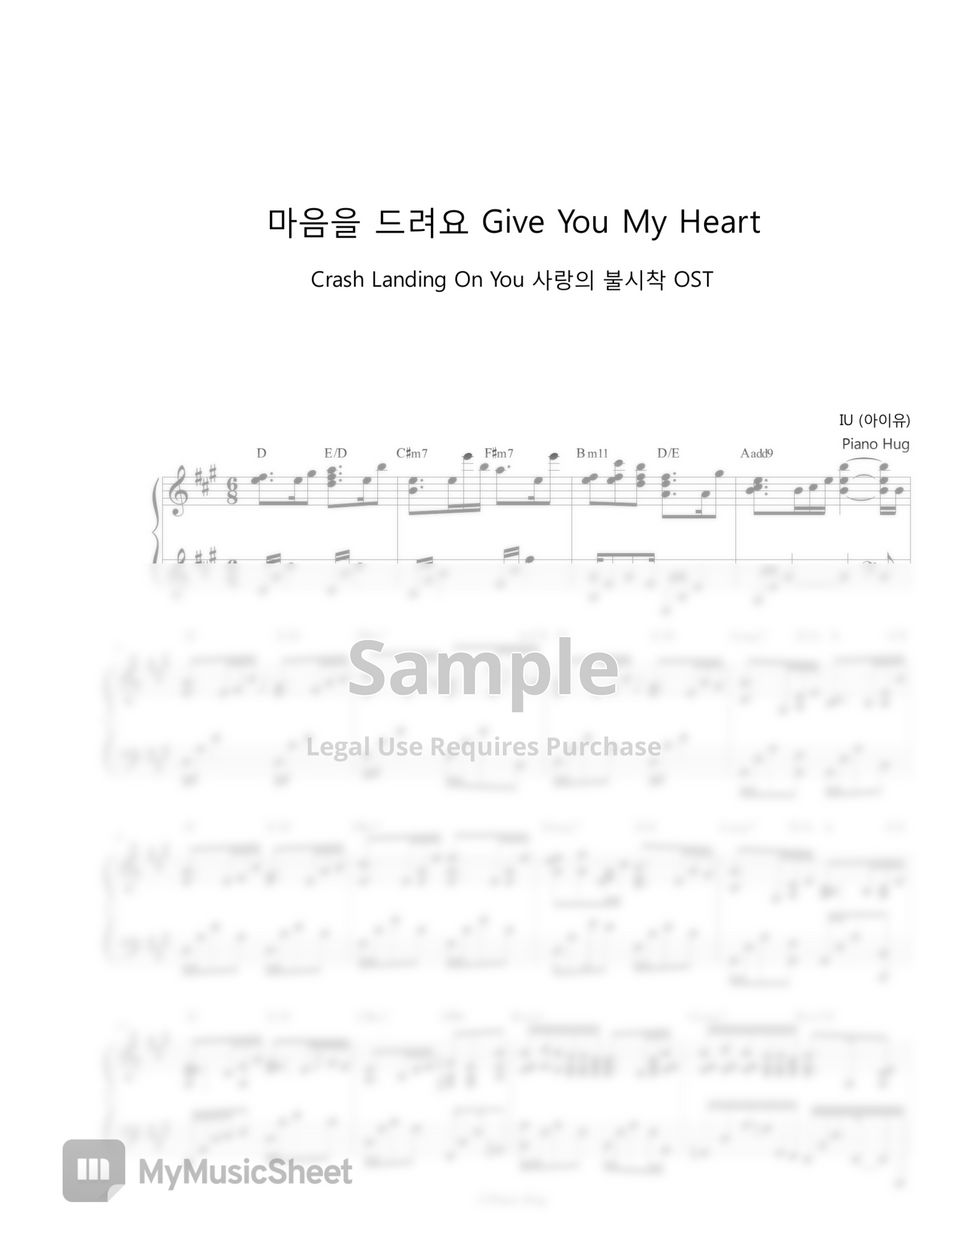 IU - Give You My Heart (Crash Landing On You OST) by Piano Hug